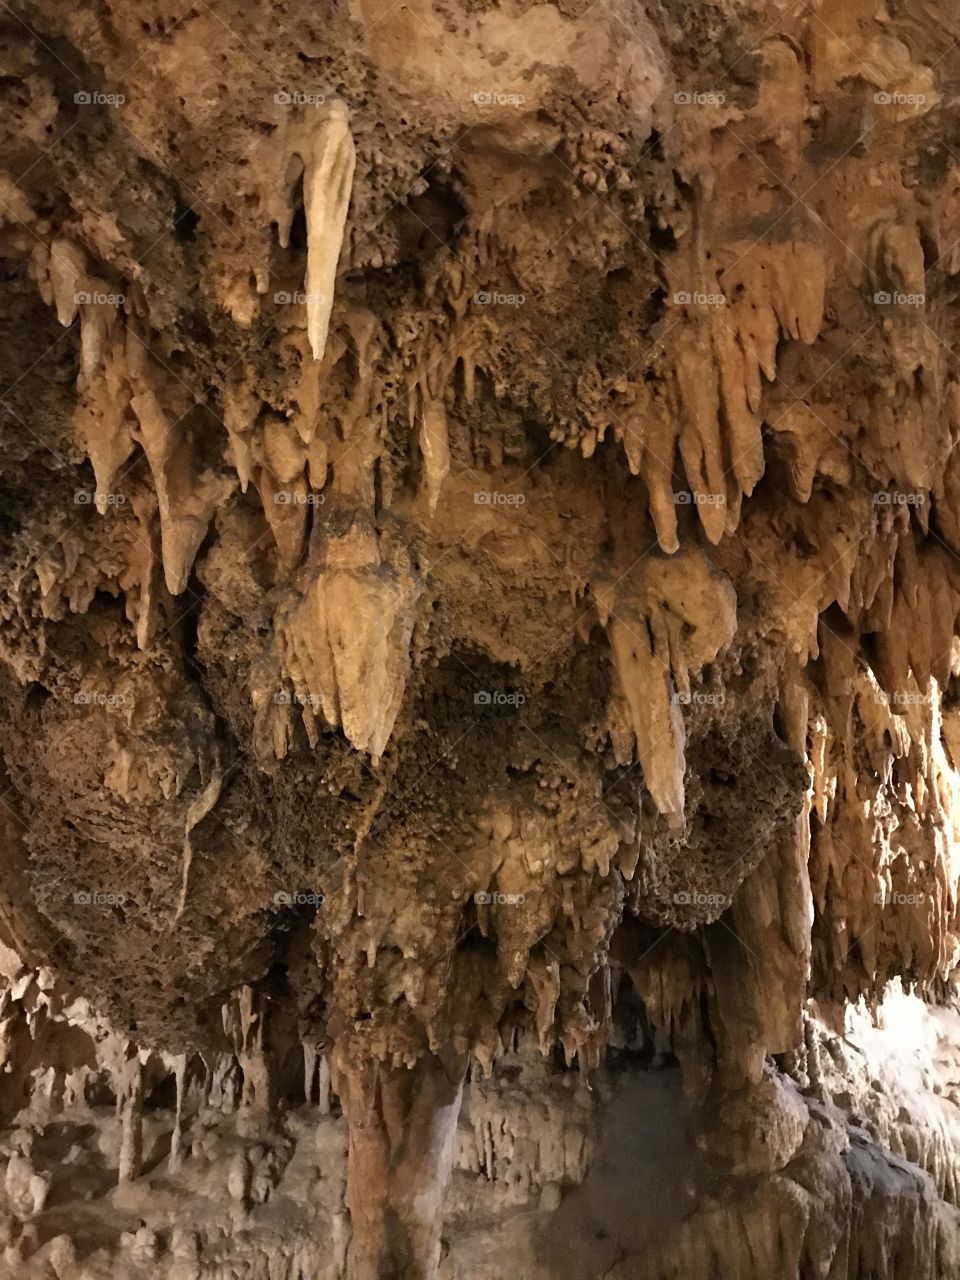 Stalactites in Luray Caverns, West Virginia 